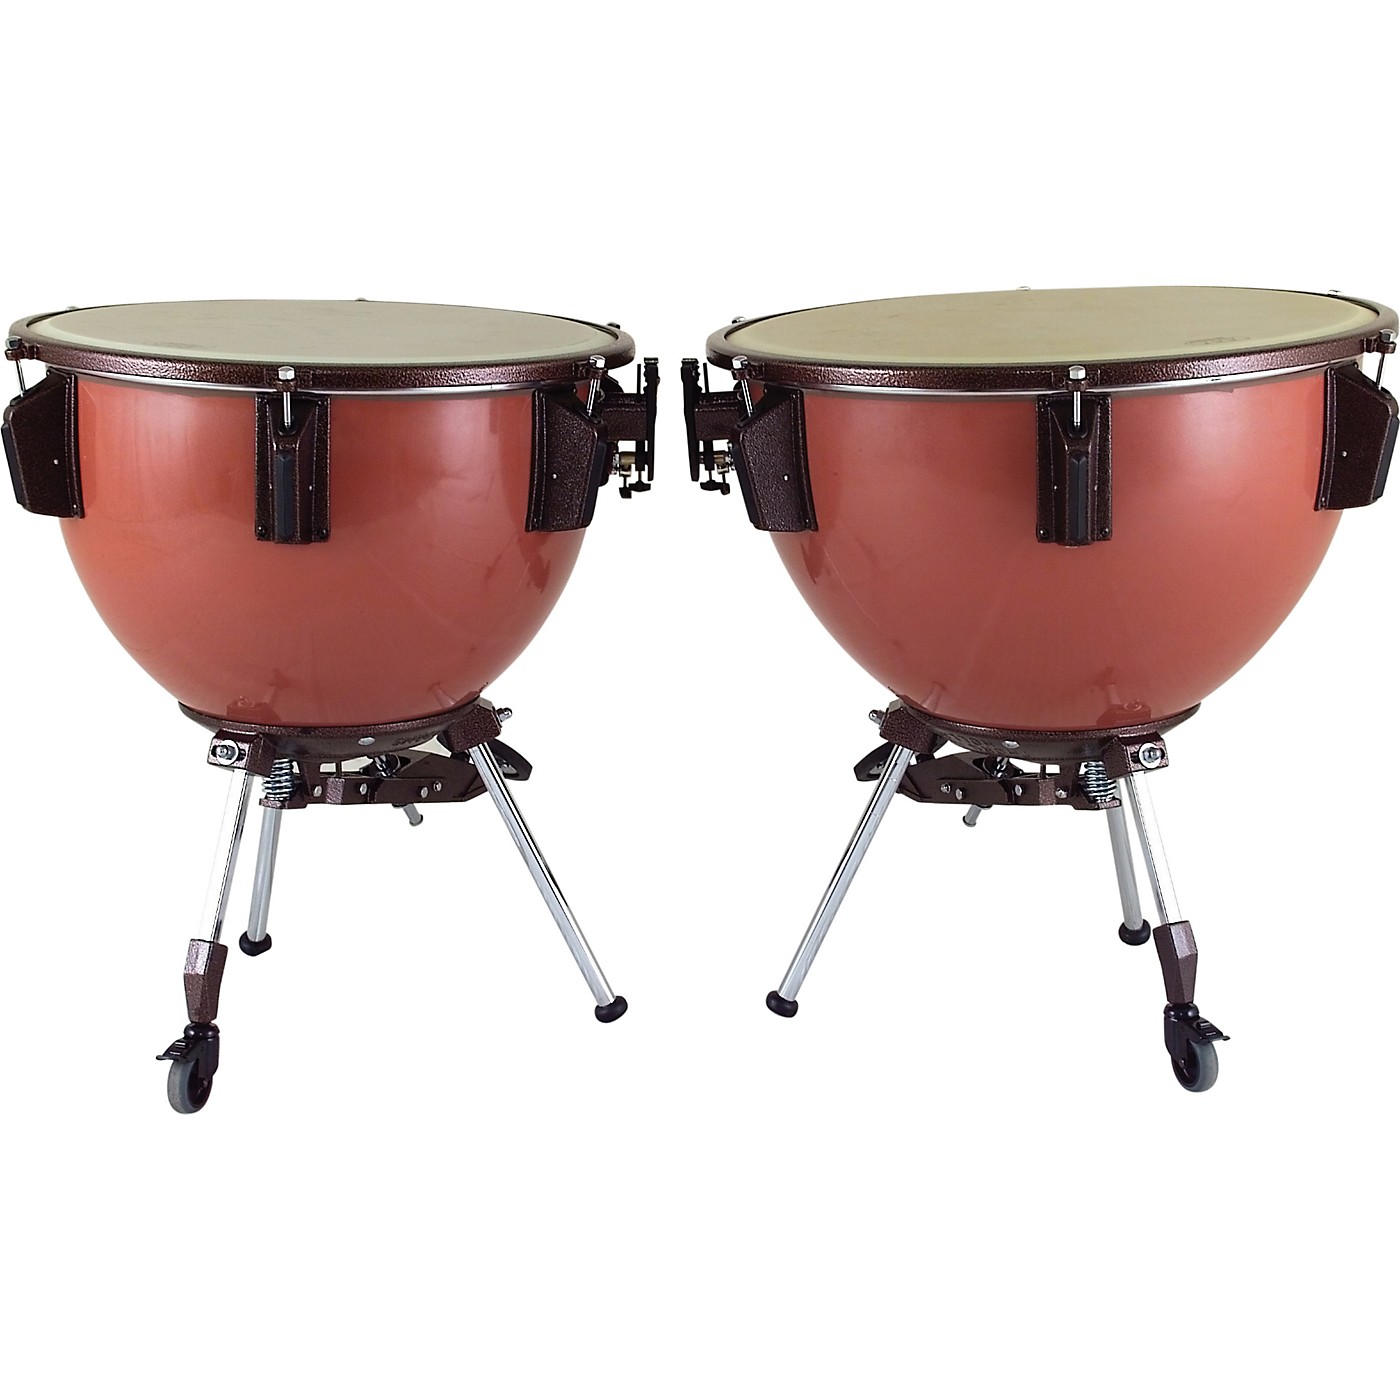 Adams Universal Series Fiberglass Timpani Concert Drums thumbnail